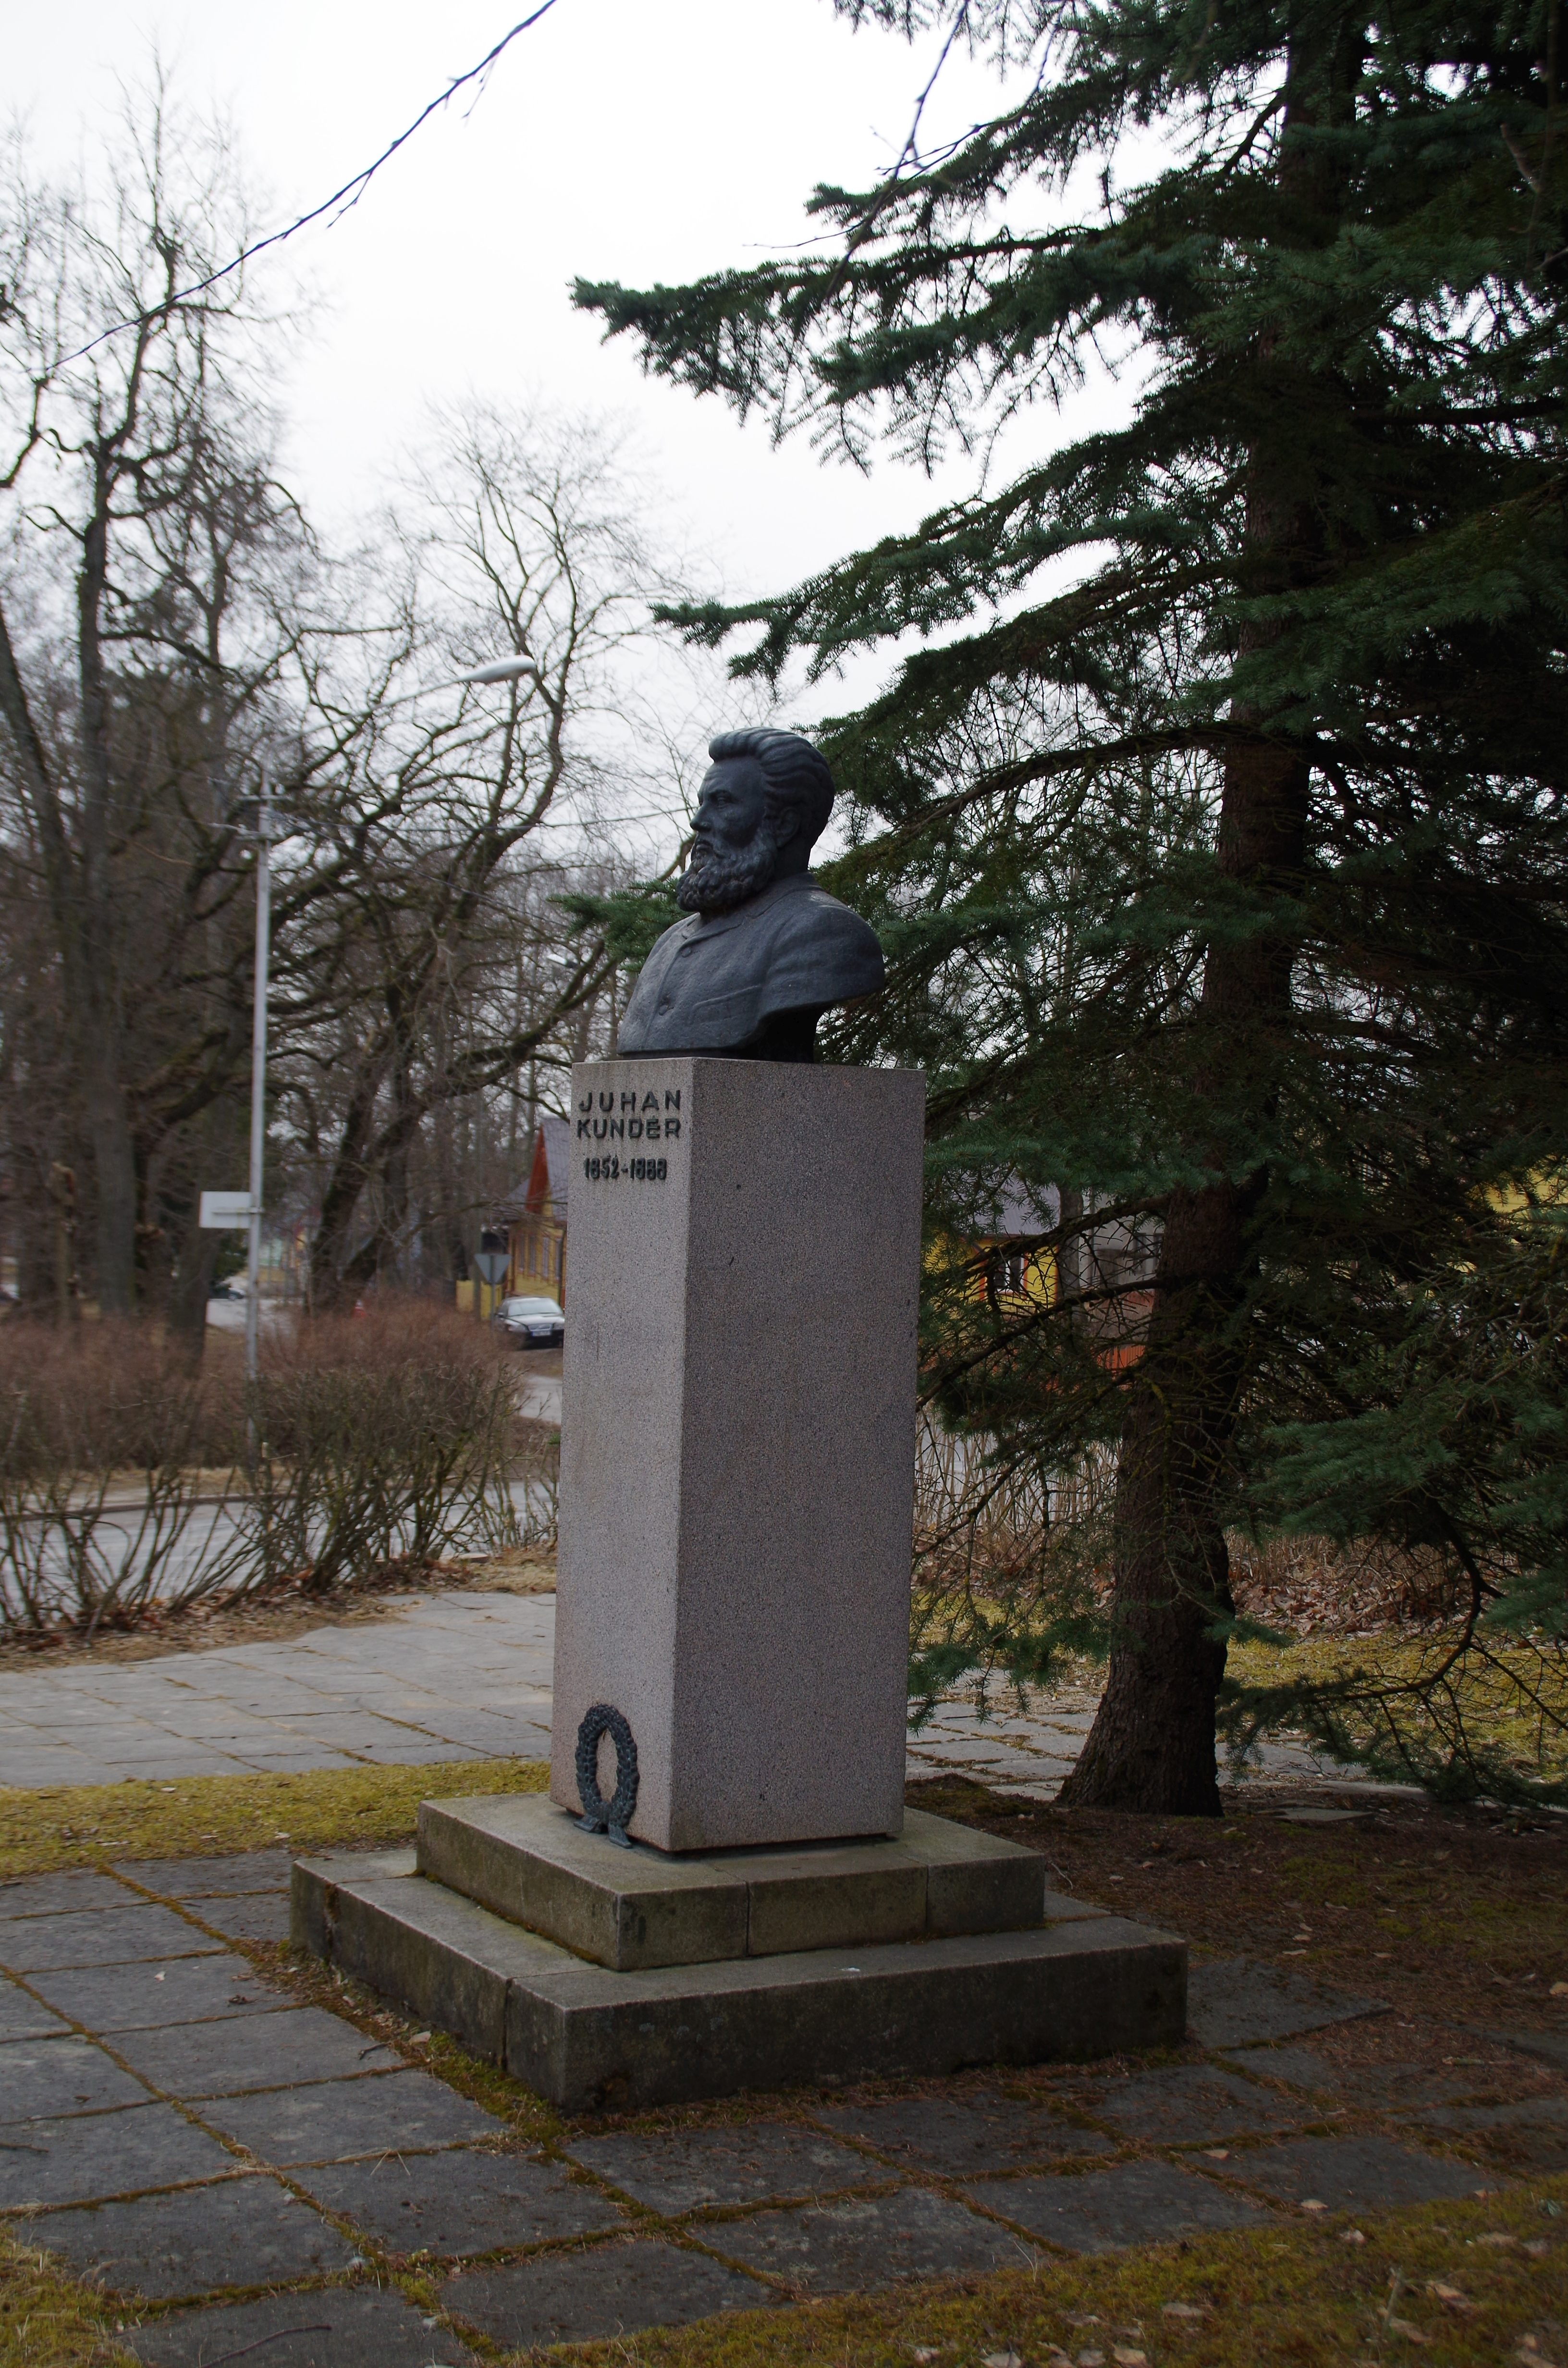 Johann Kunder monument (granite, bronze) Lääne-Viru county Rakvere city m. I. Kalinin Street at the end of the street rephoto